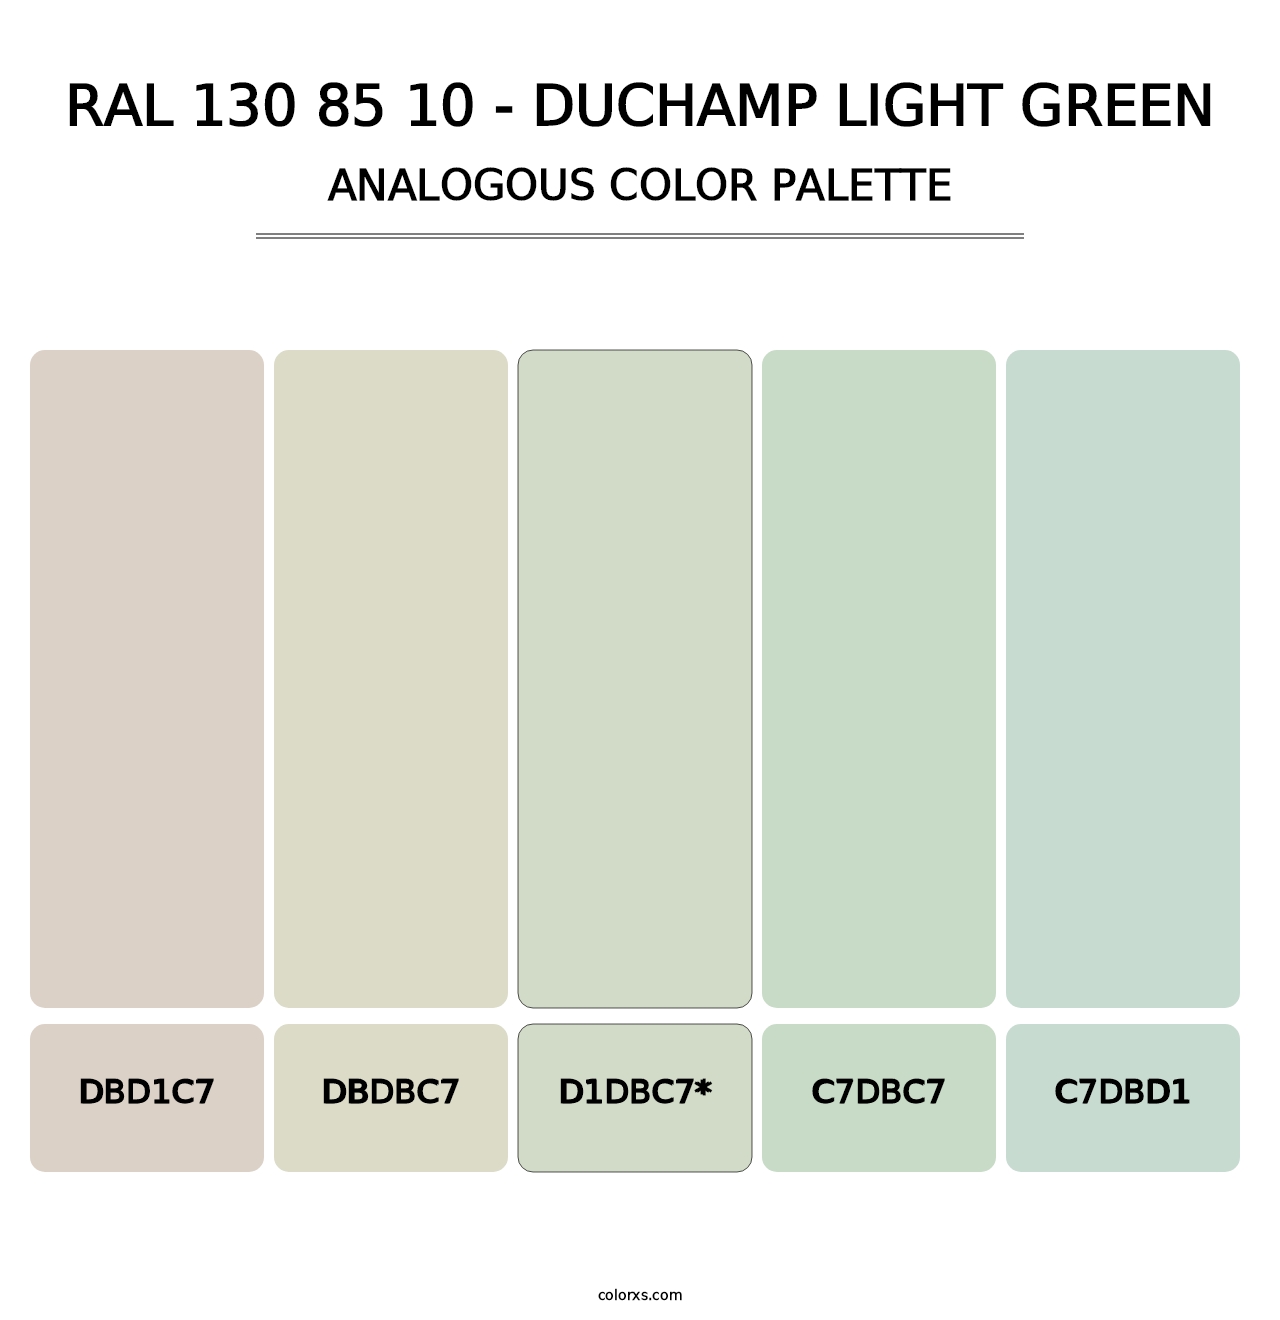 RAL 130 85 10 - Duchamp Light Green - Analogous Color Palette